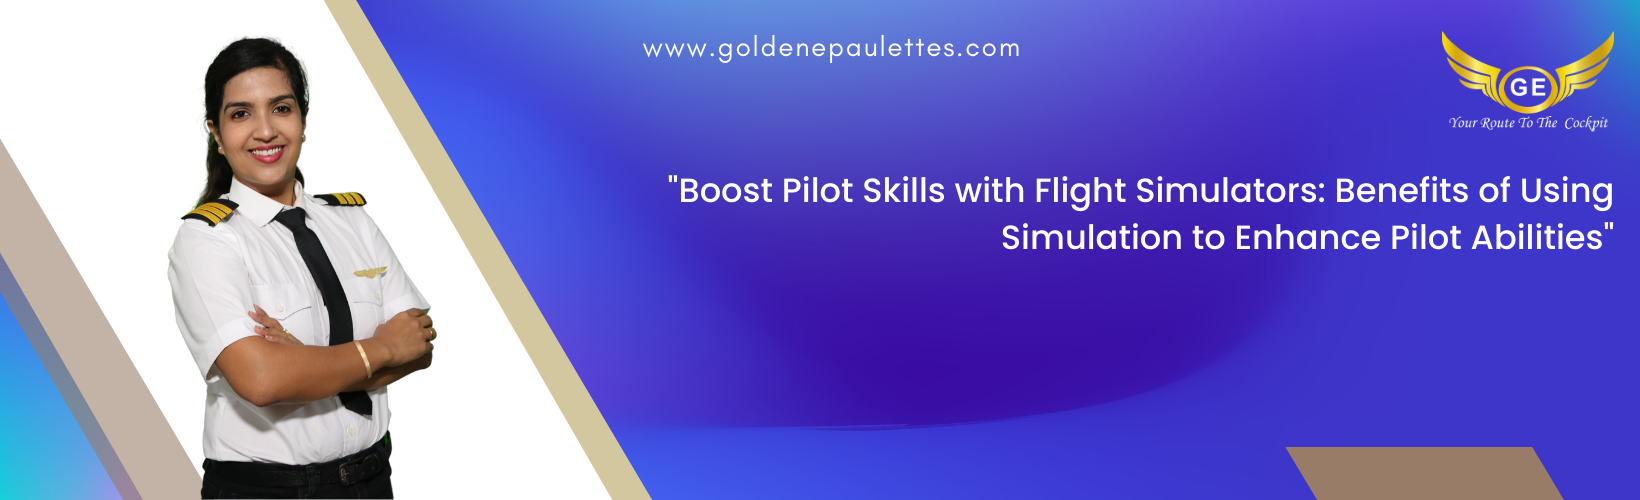 Using Flight Simulators to Improve Pilot Skills